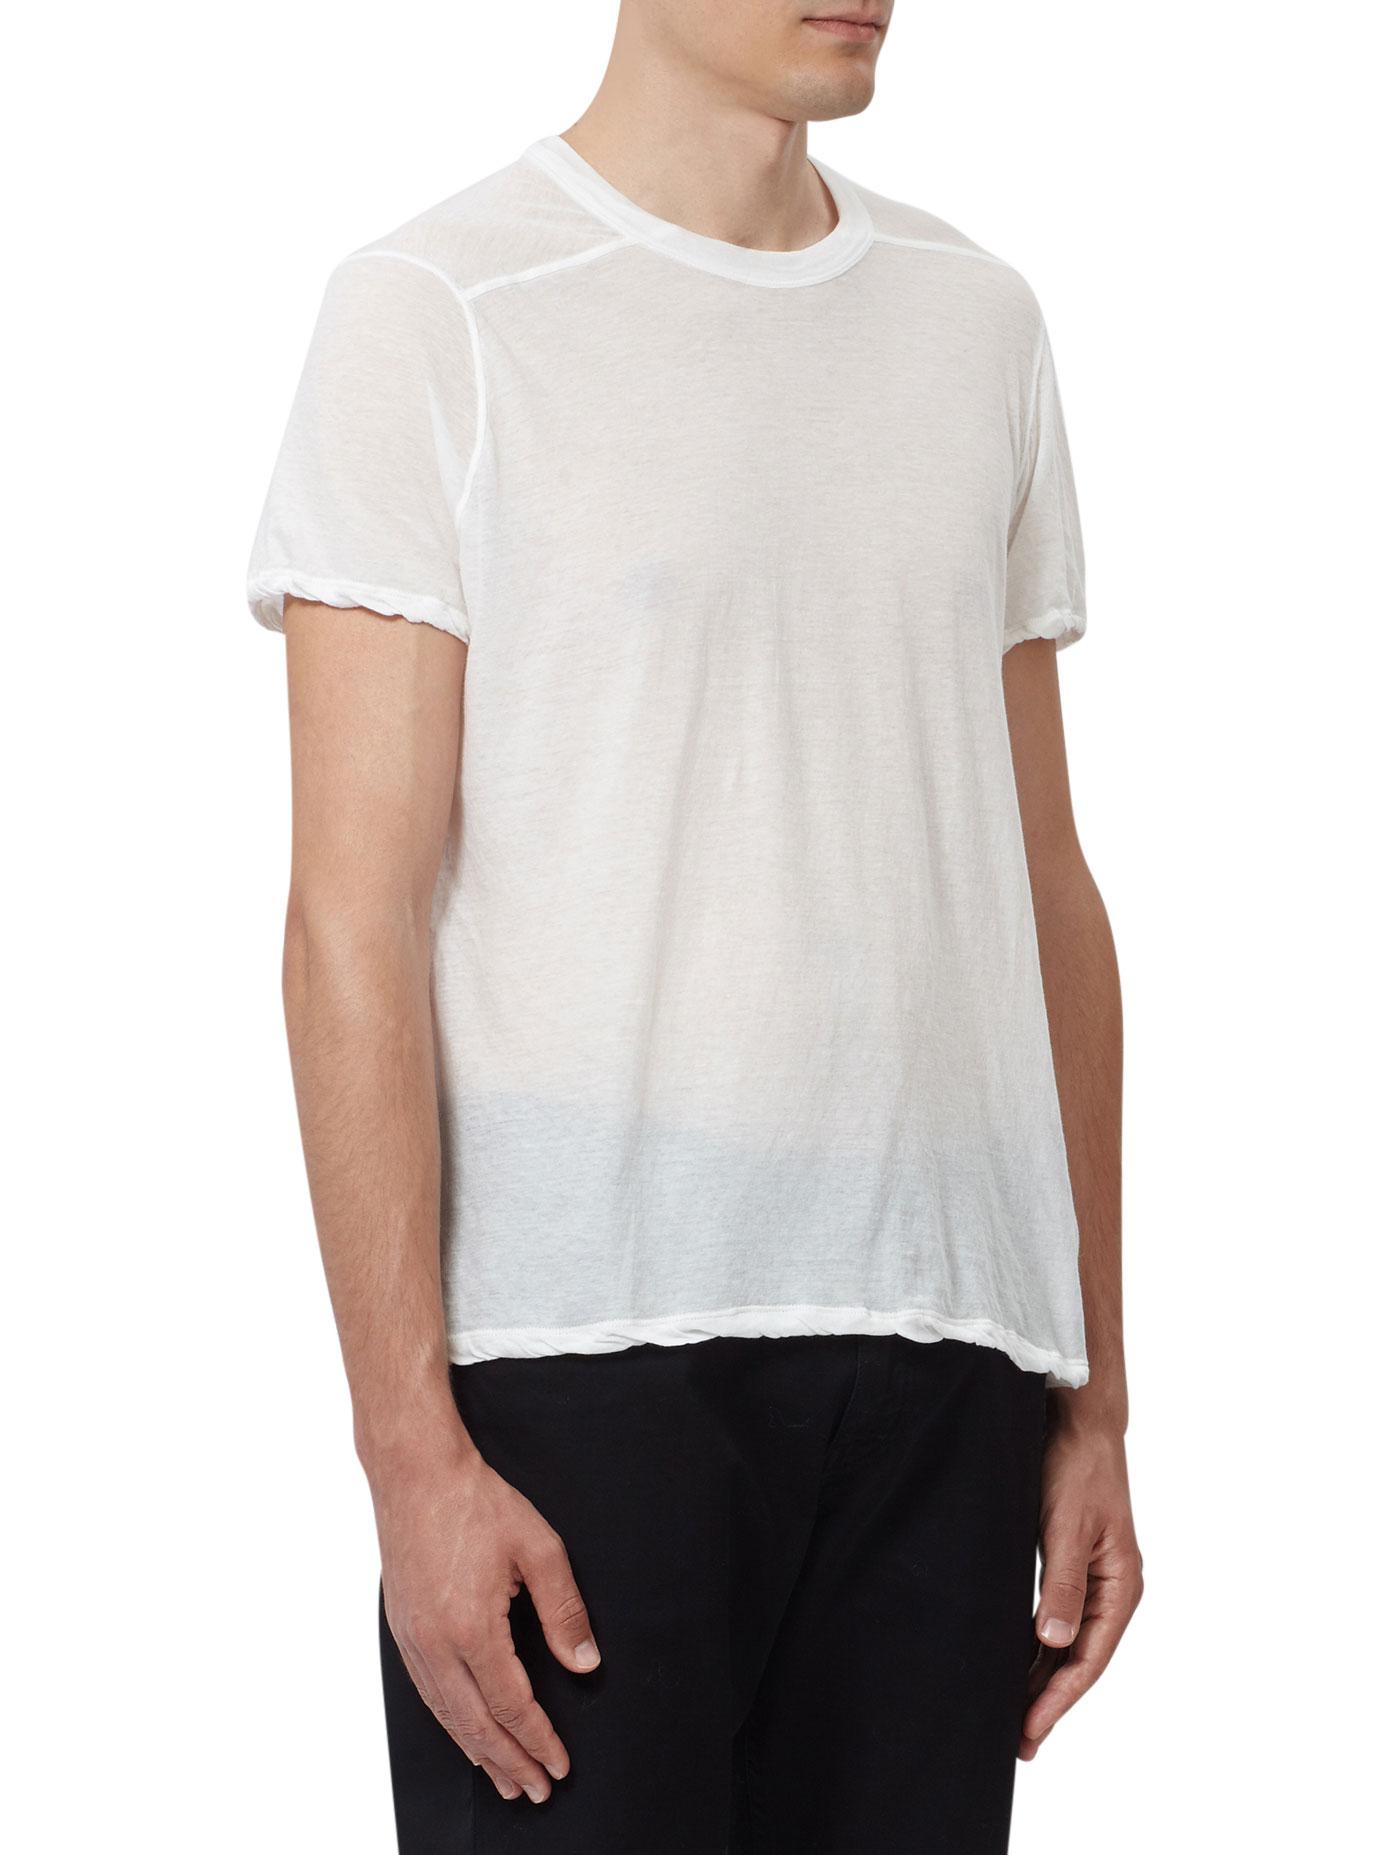 Døde i verden tandpine ned Rick Owens Semi Transparent Cotton T-shirt in White for Men | Lyst